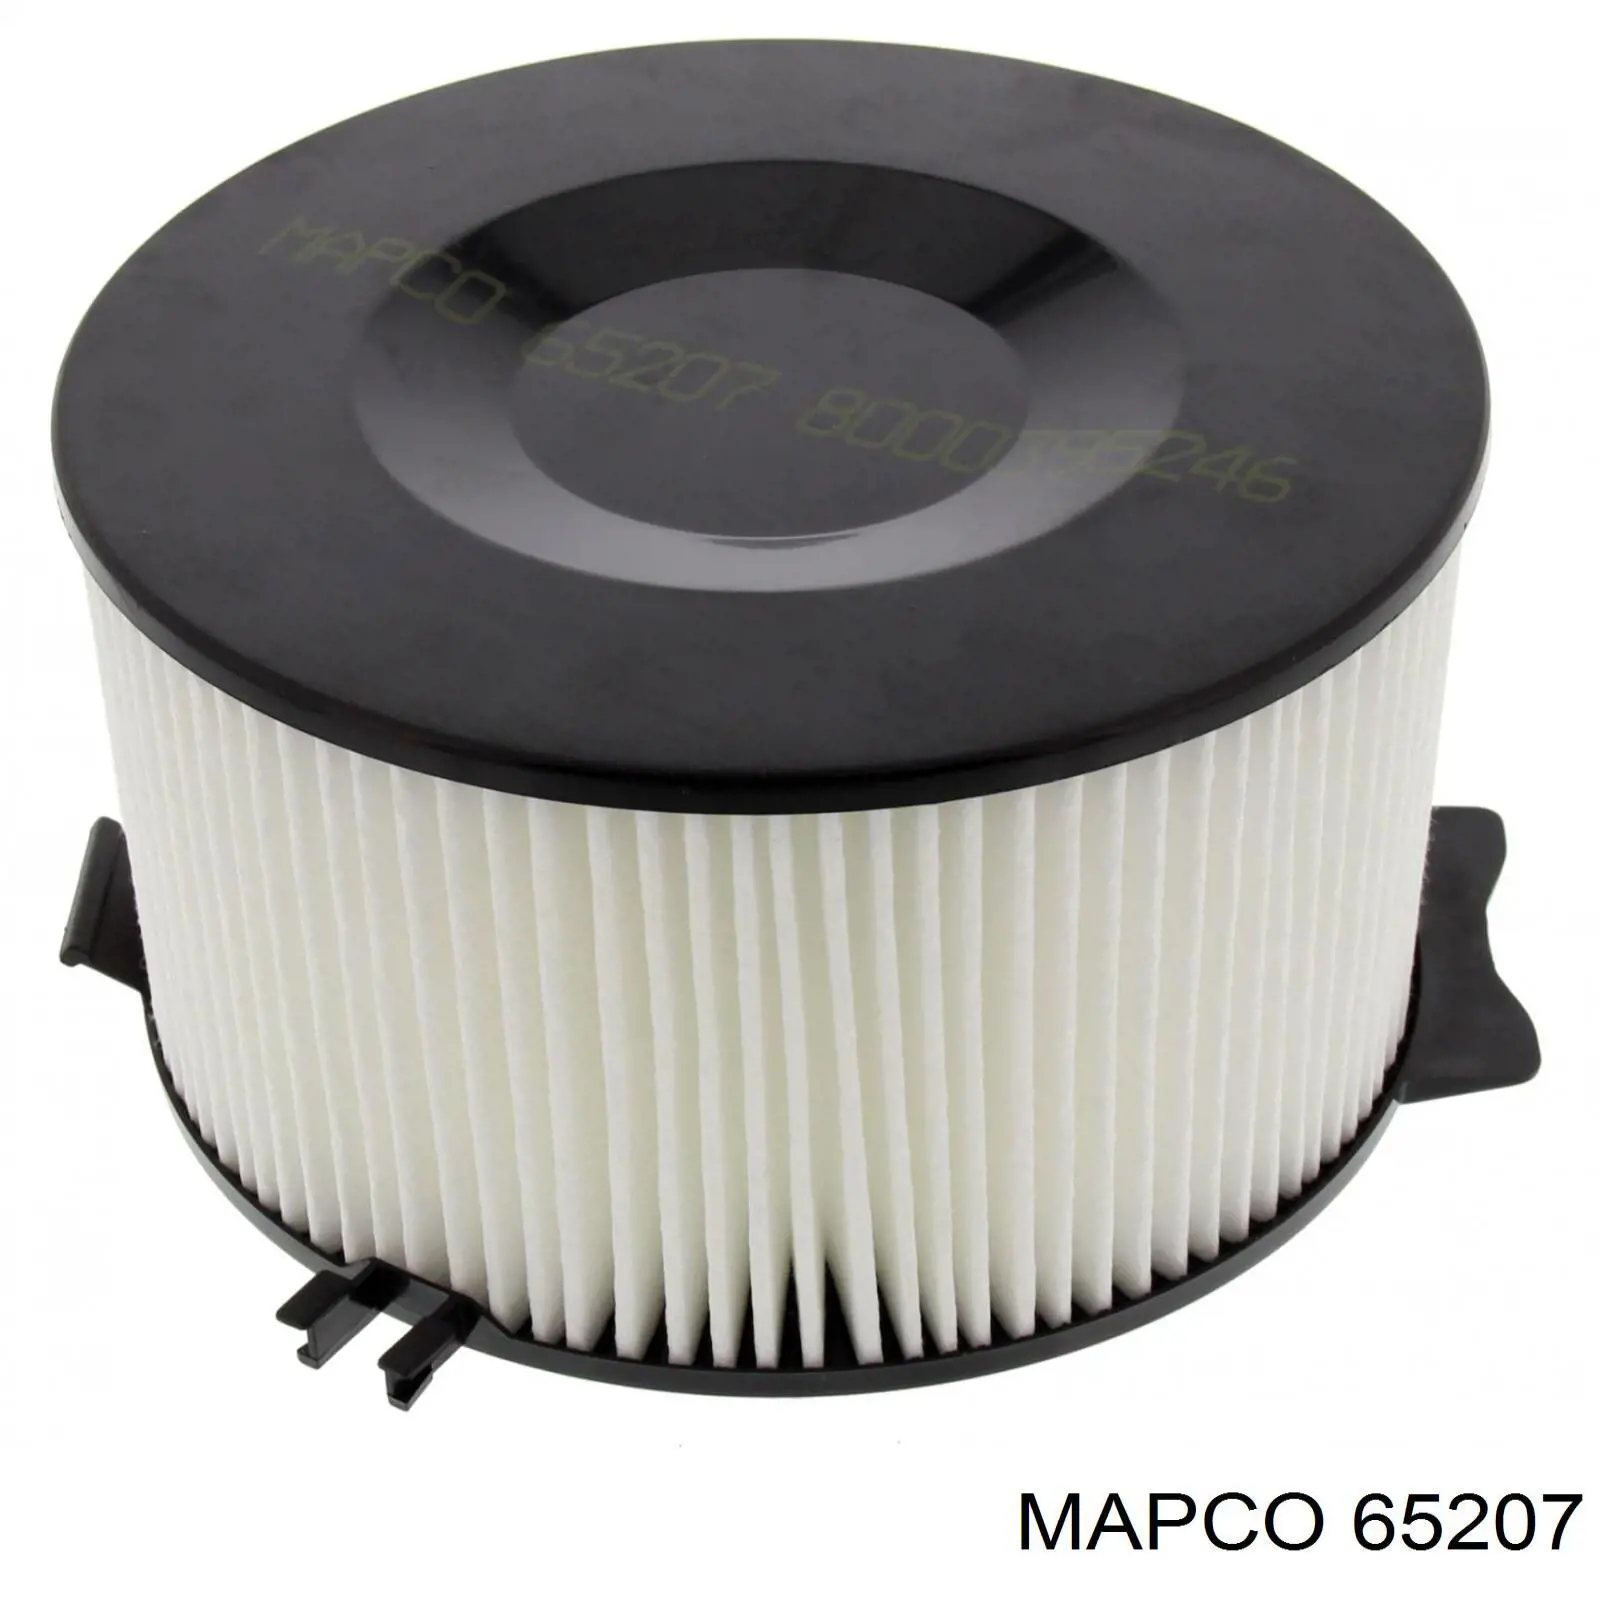 65207 Mapco filtro de aire